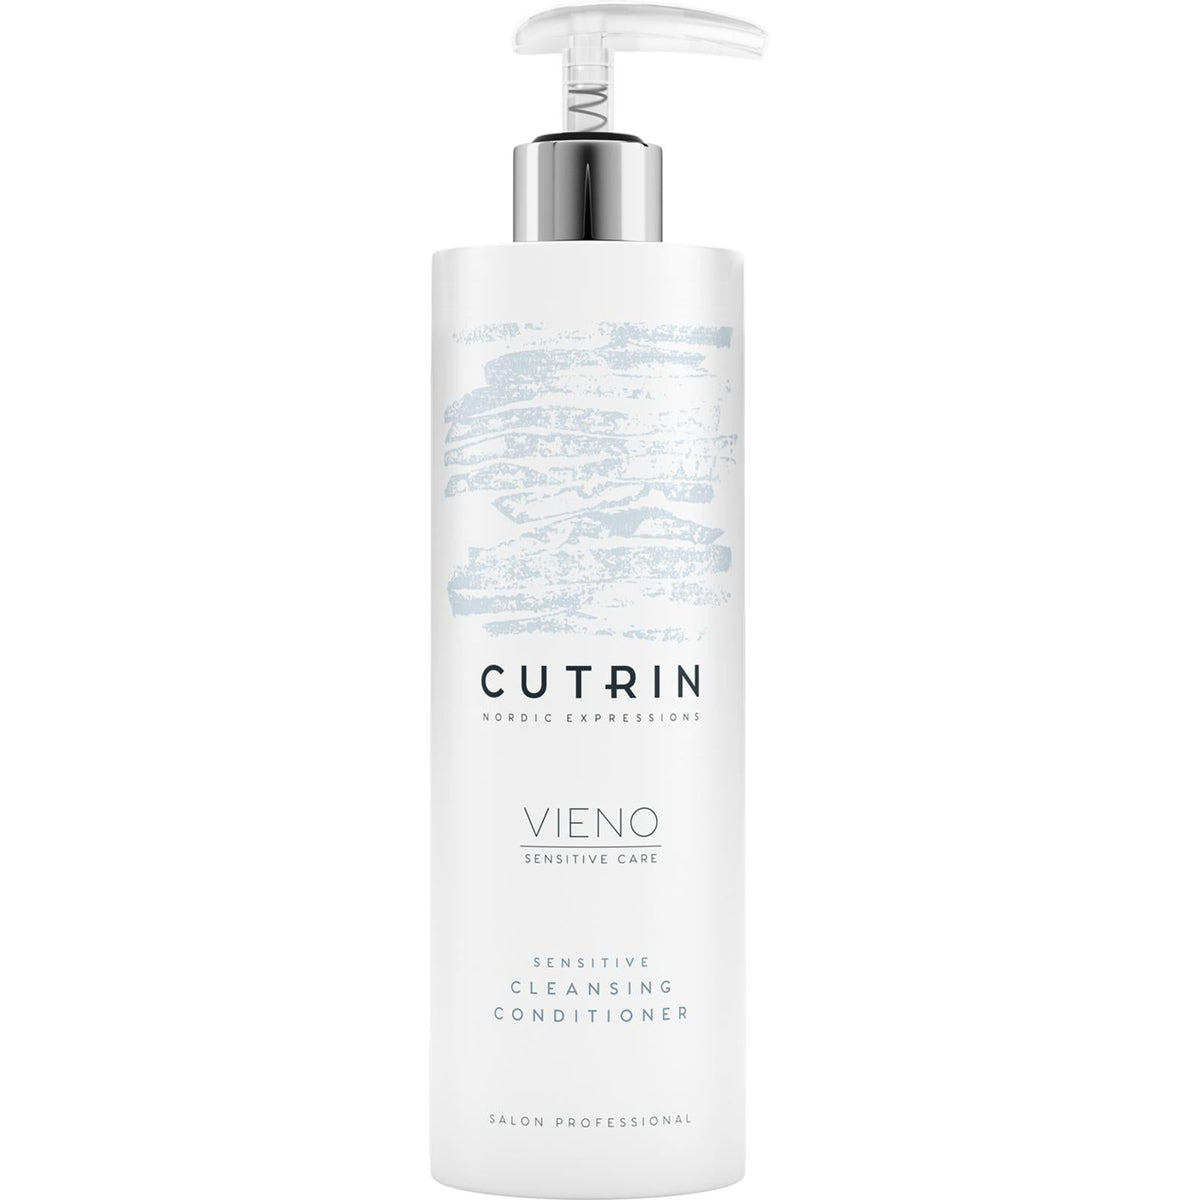 Cutrin Vieno Sensitive Cleanising Conditioner 400 ml